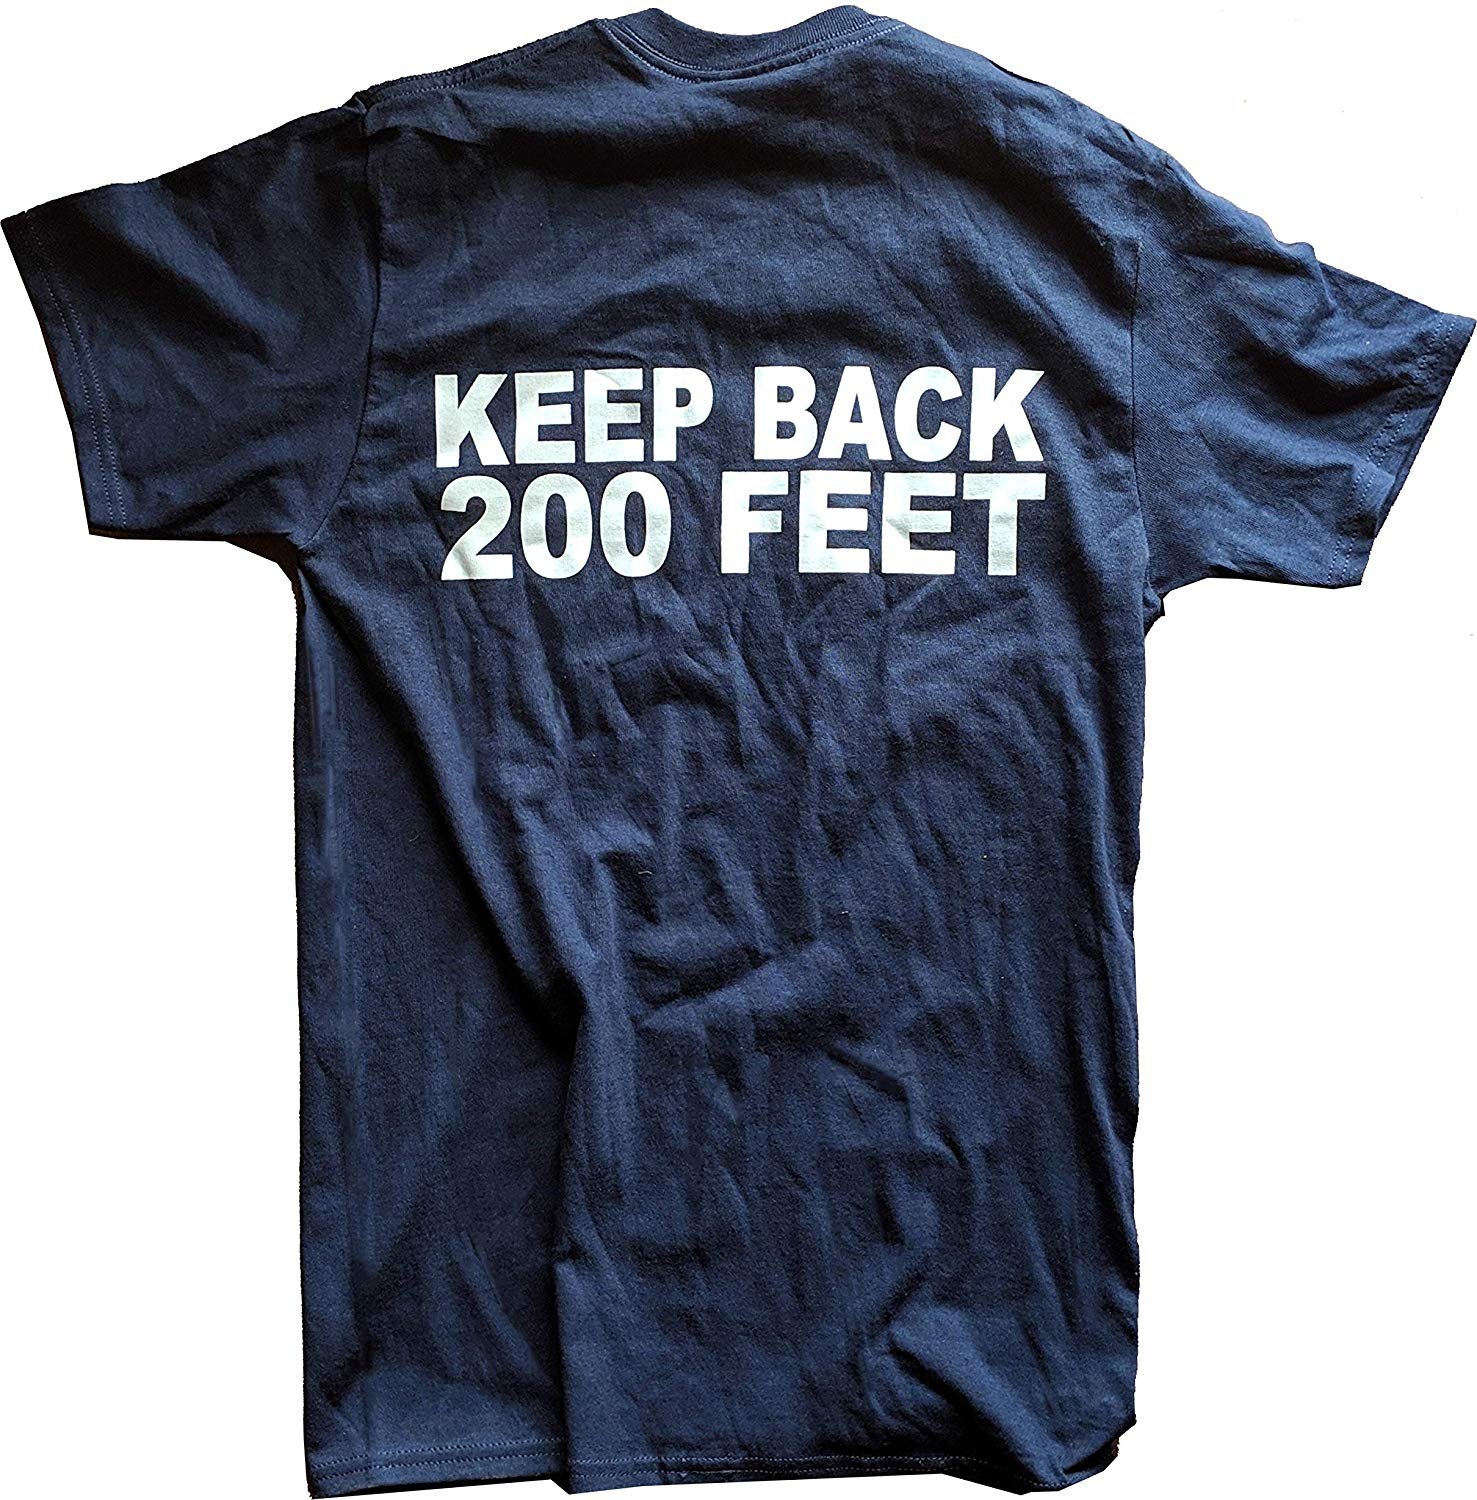 FDNY Men's Keep Back 200 Feet T-Shirt Navy Blue Tee | eBay